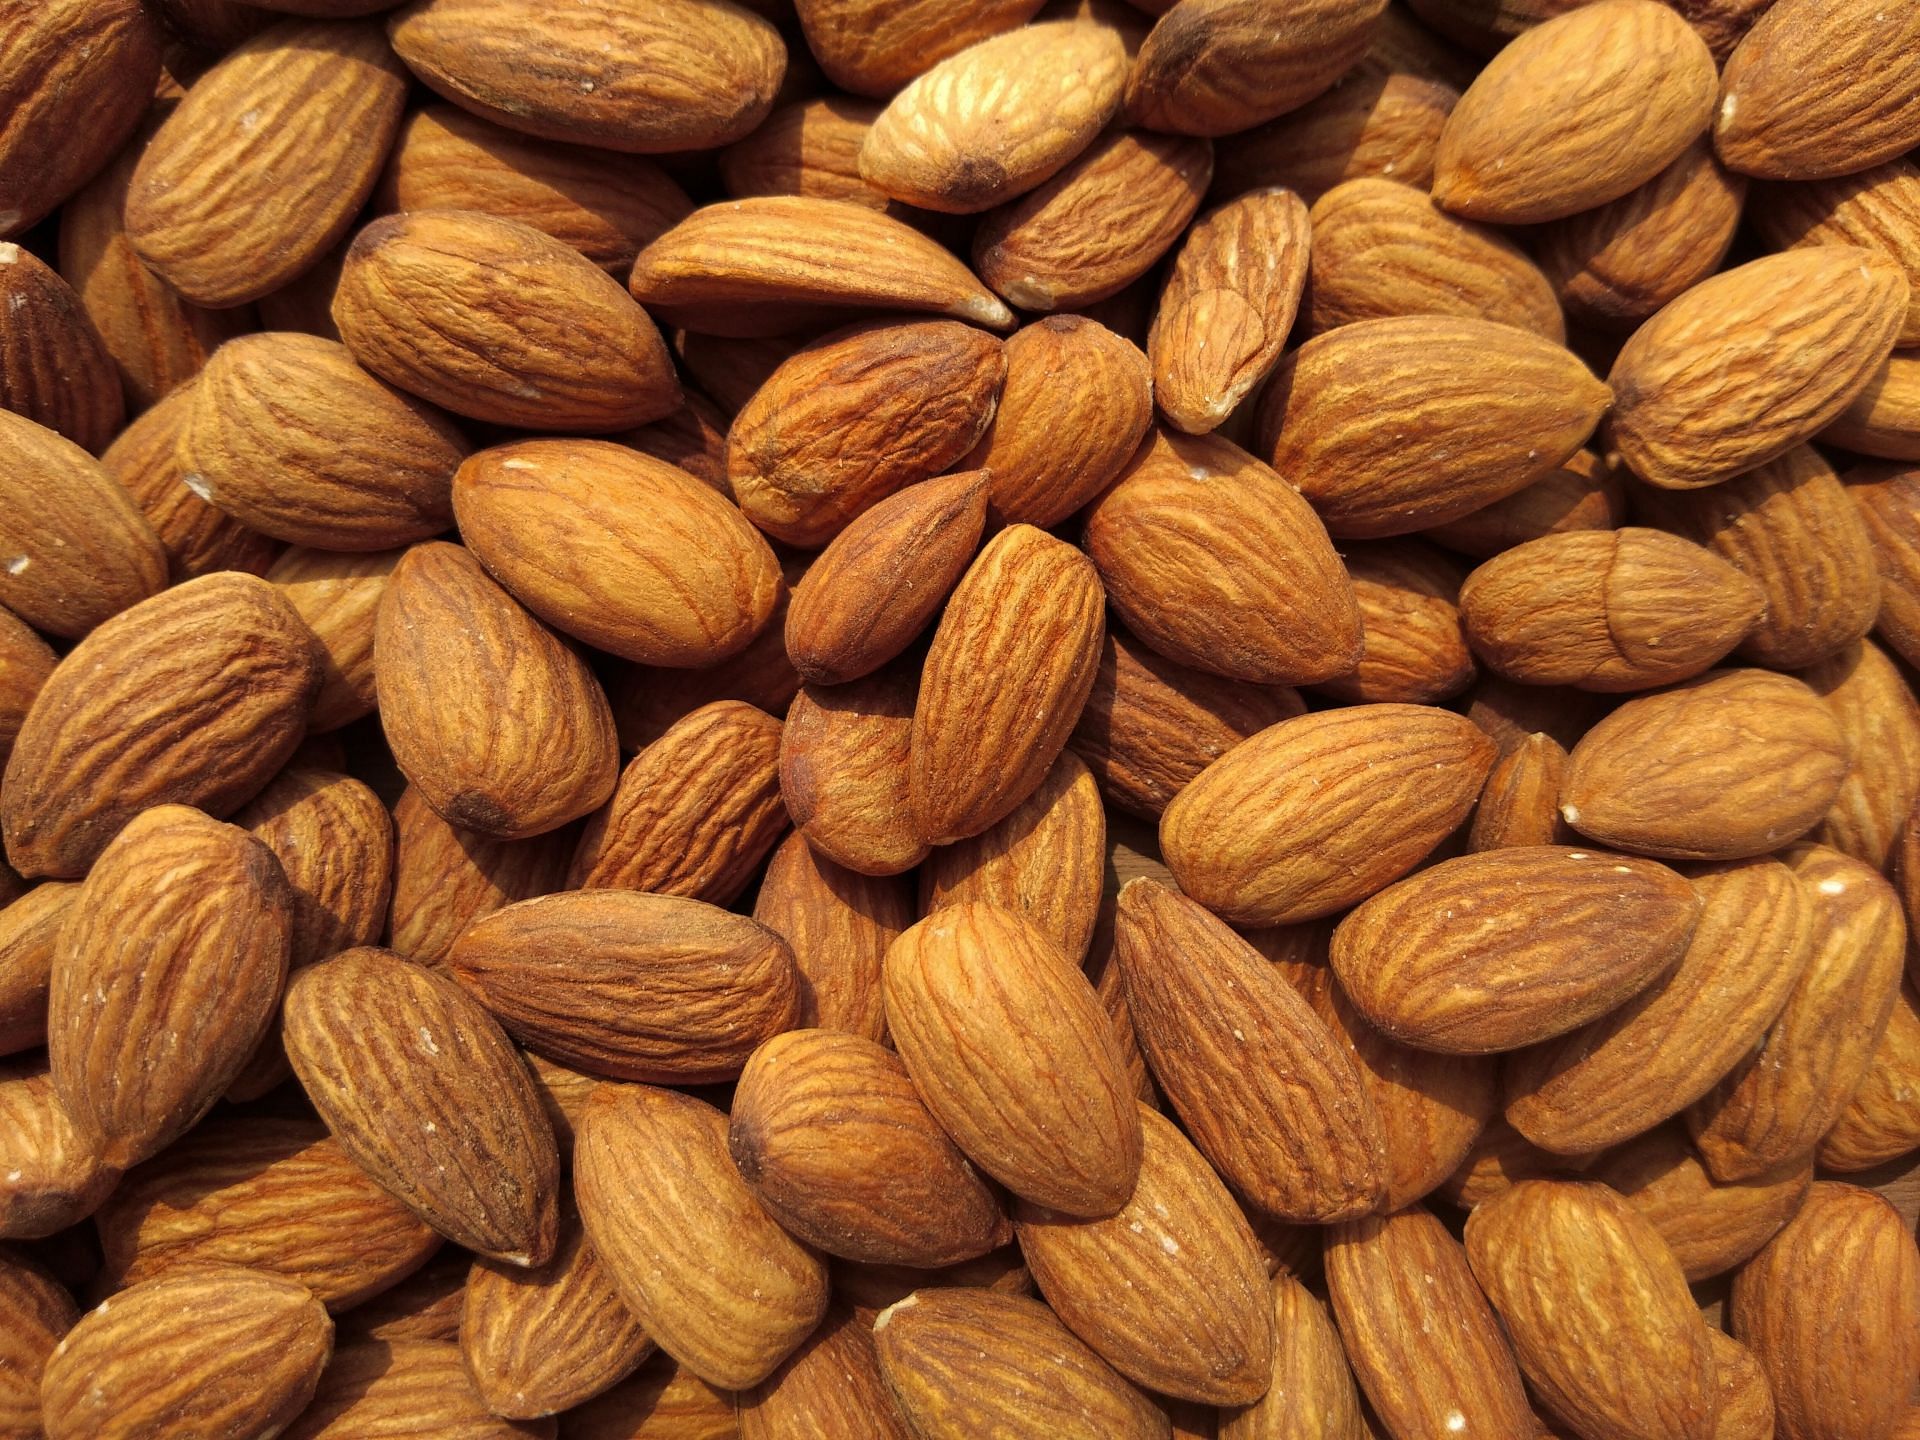 Soaked vs Unsoaked Almonds (Image via Unsplash/Avinash Kumar)